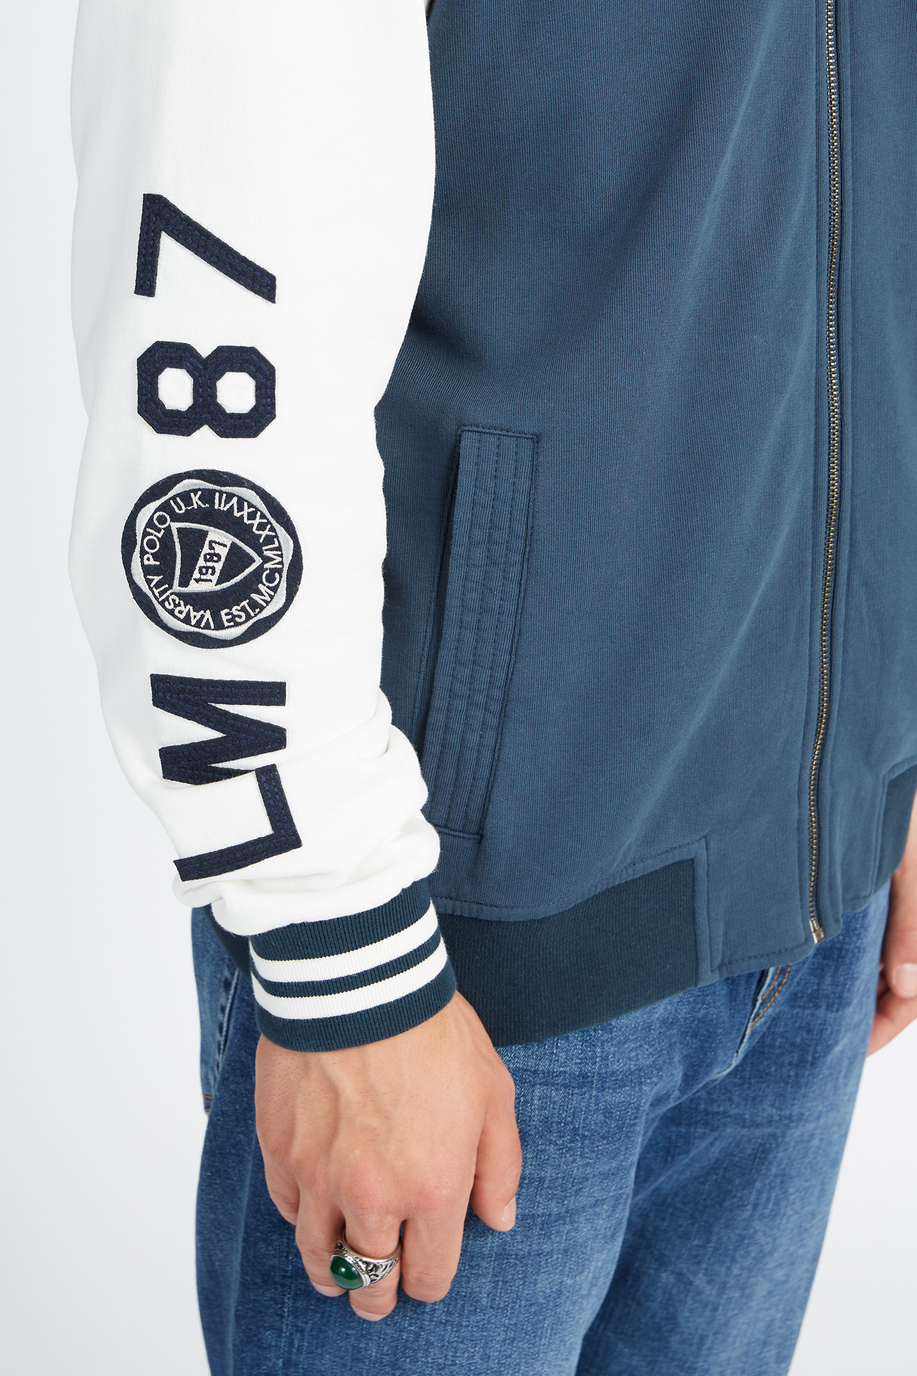 Polo Academy men's full-zip crewneck sweatshirt in color block with large logo - Vandan - Our favourites for him | La Martina - Official Online Shop